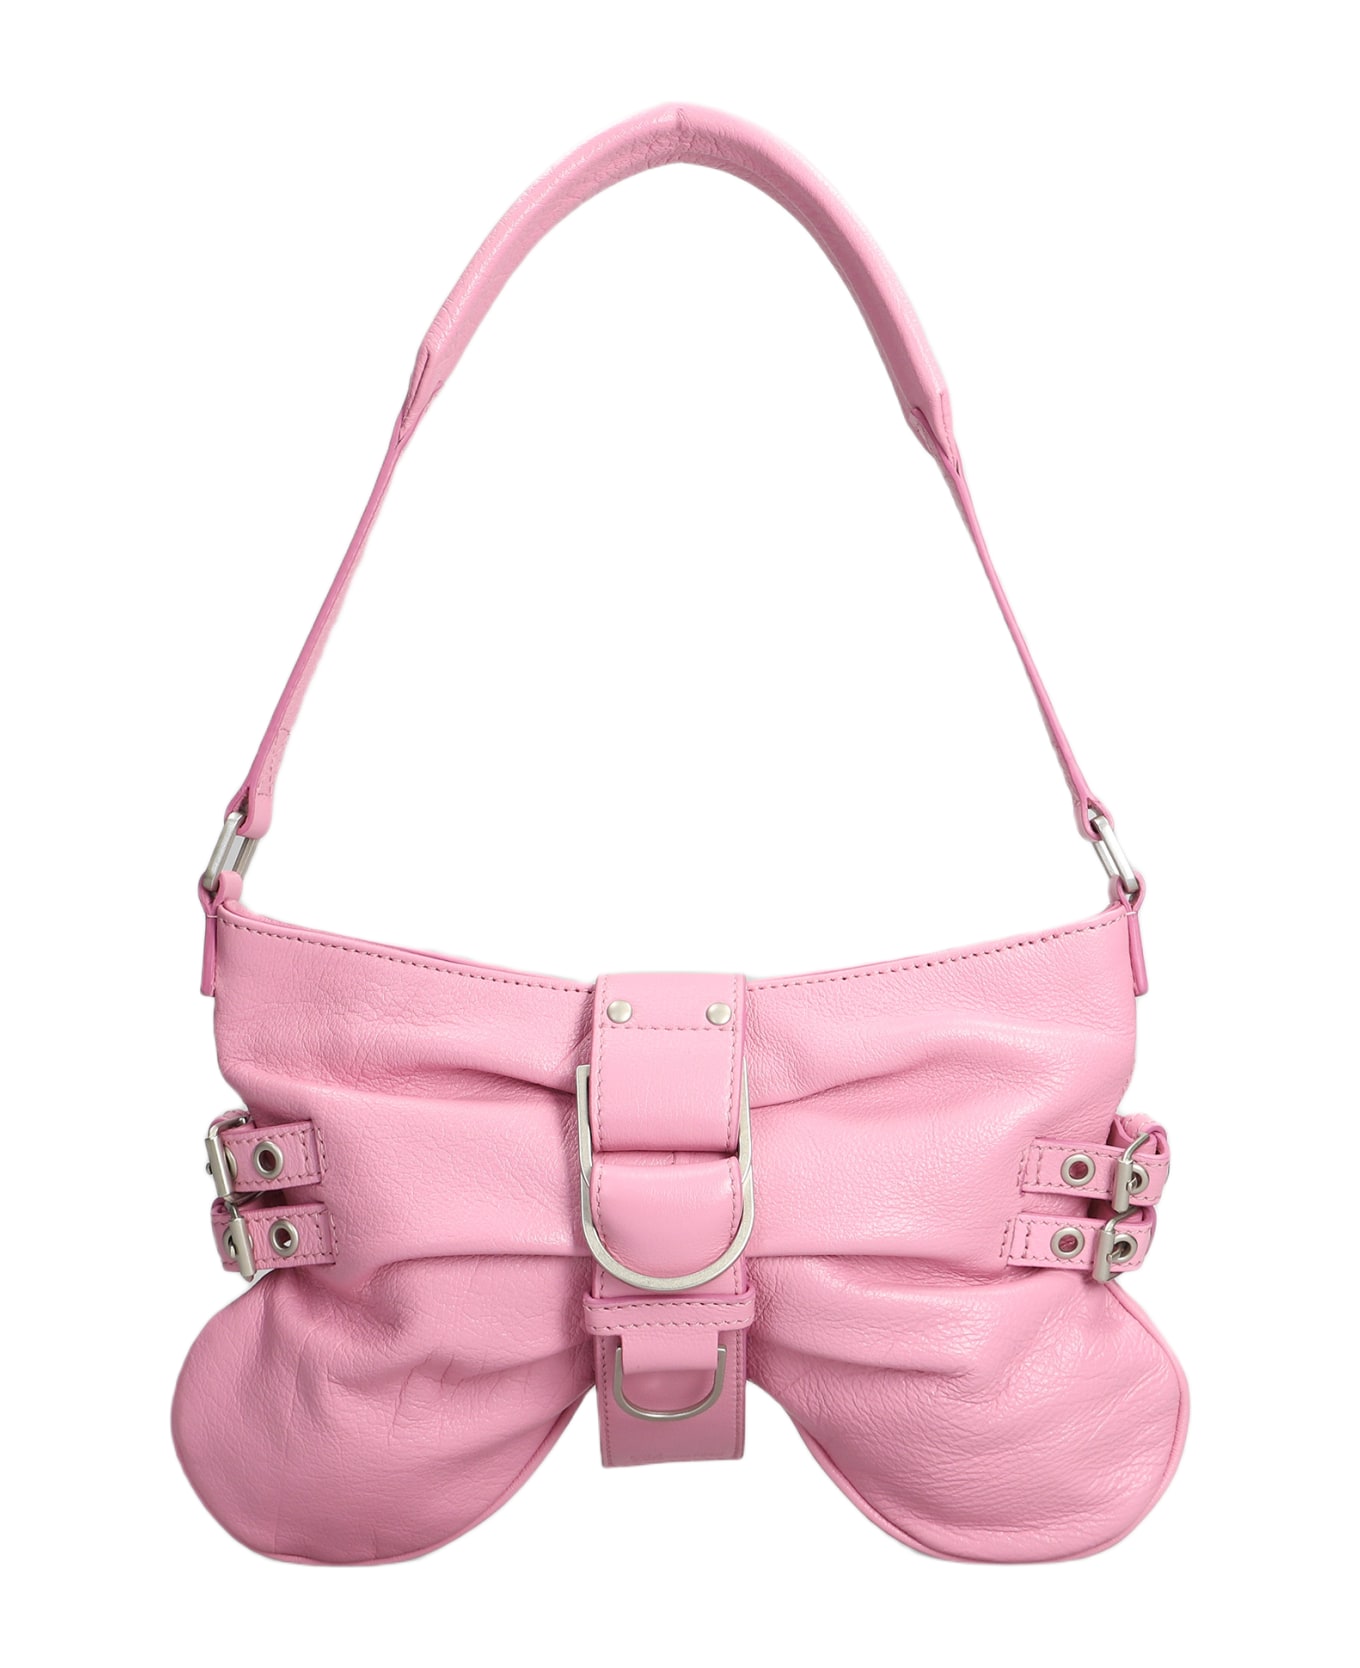 Blumarine Hand Bag In Rose-pink Leather - Dalia